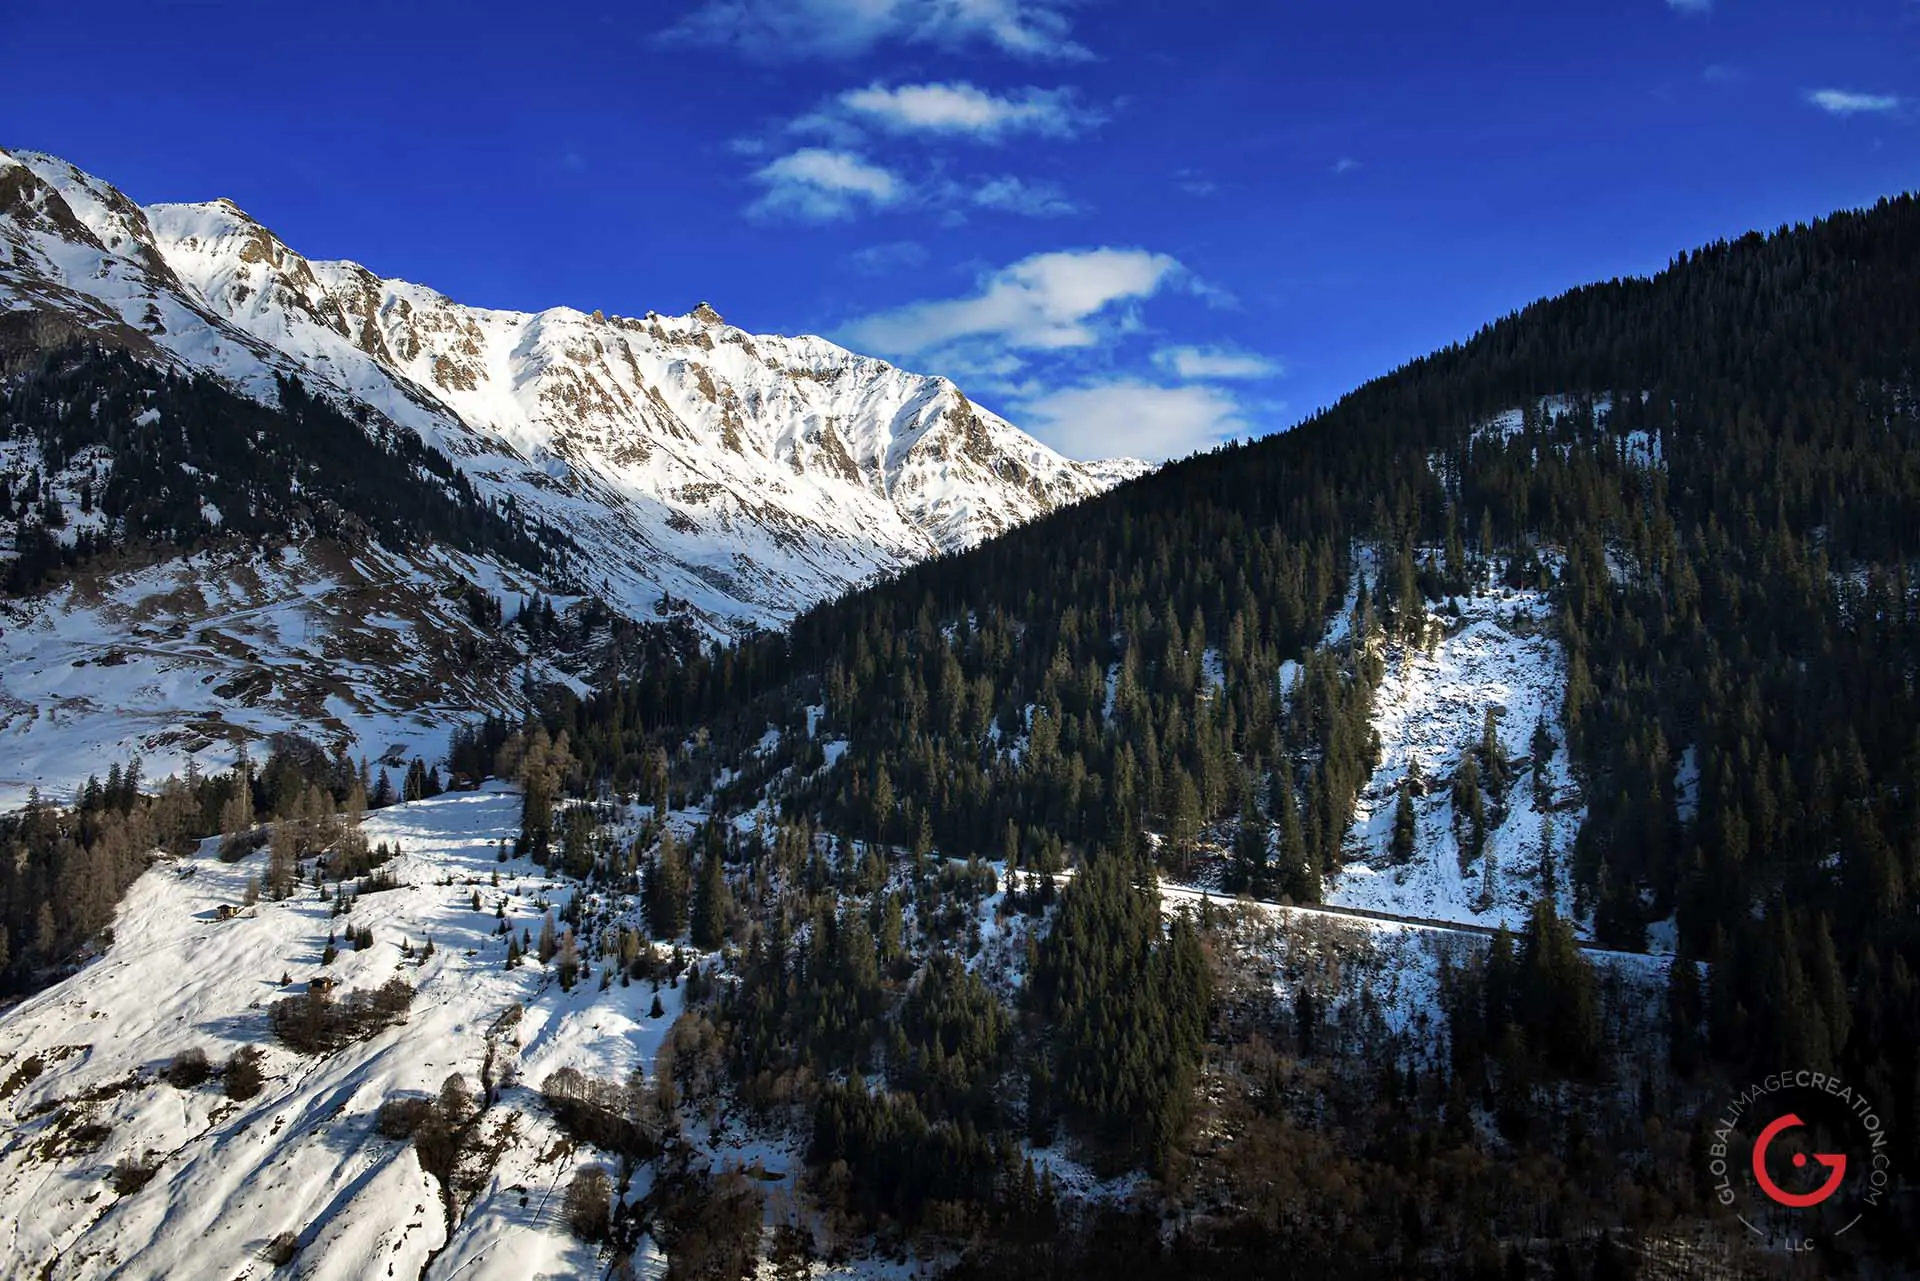 Snow on the Swiss Alps Landscape - Professional Photographer Lifestyle Photography Wardrobe Stylist